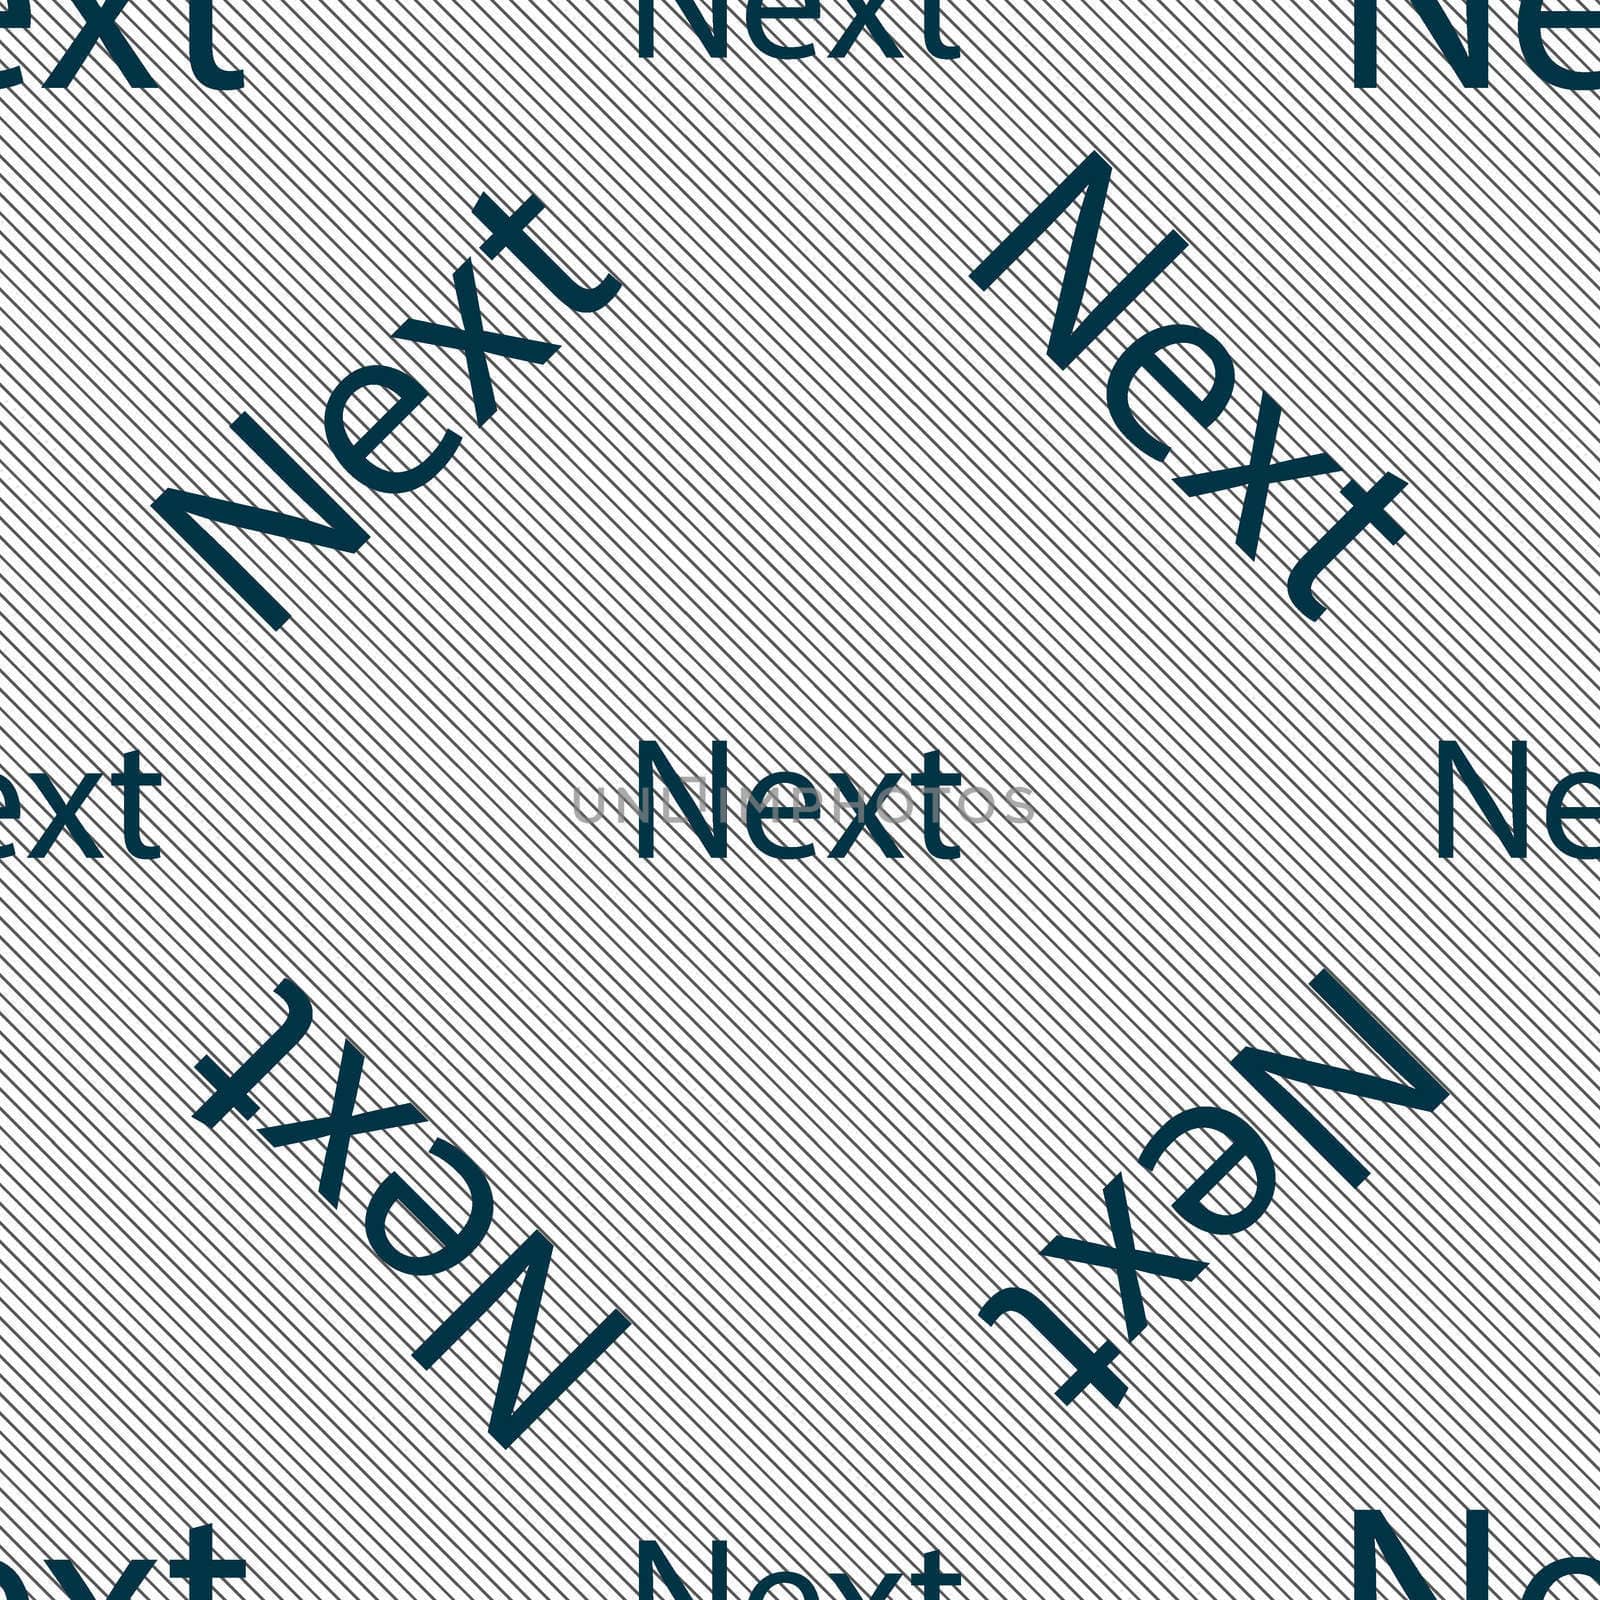 Next sign icon. Navigation symbol. Seamless pattern with geometric texture.  by serhii_lohvyniuk